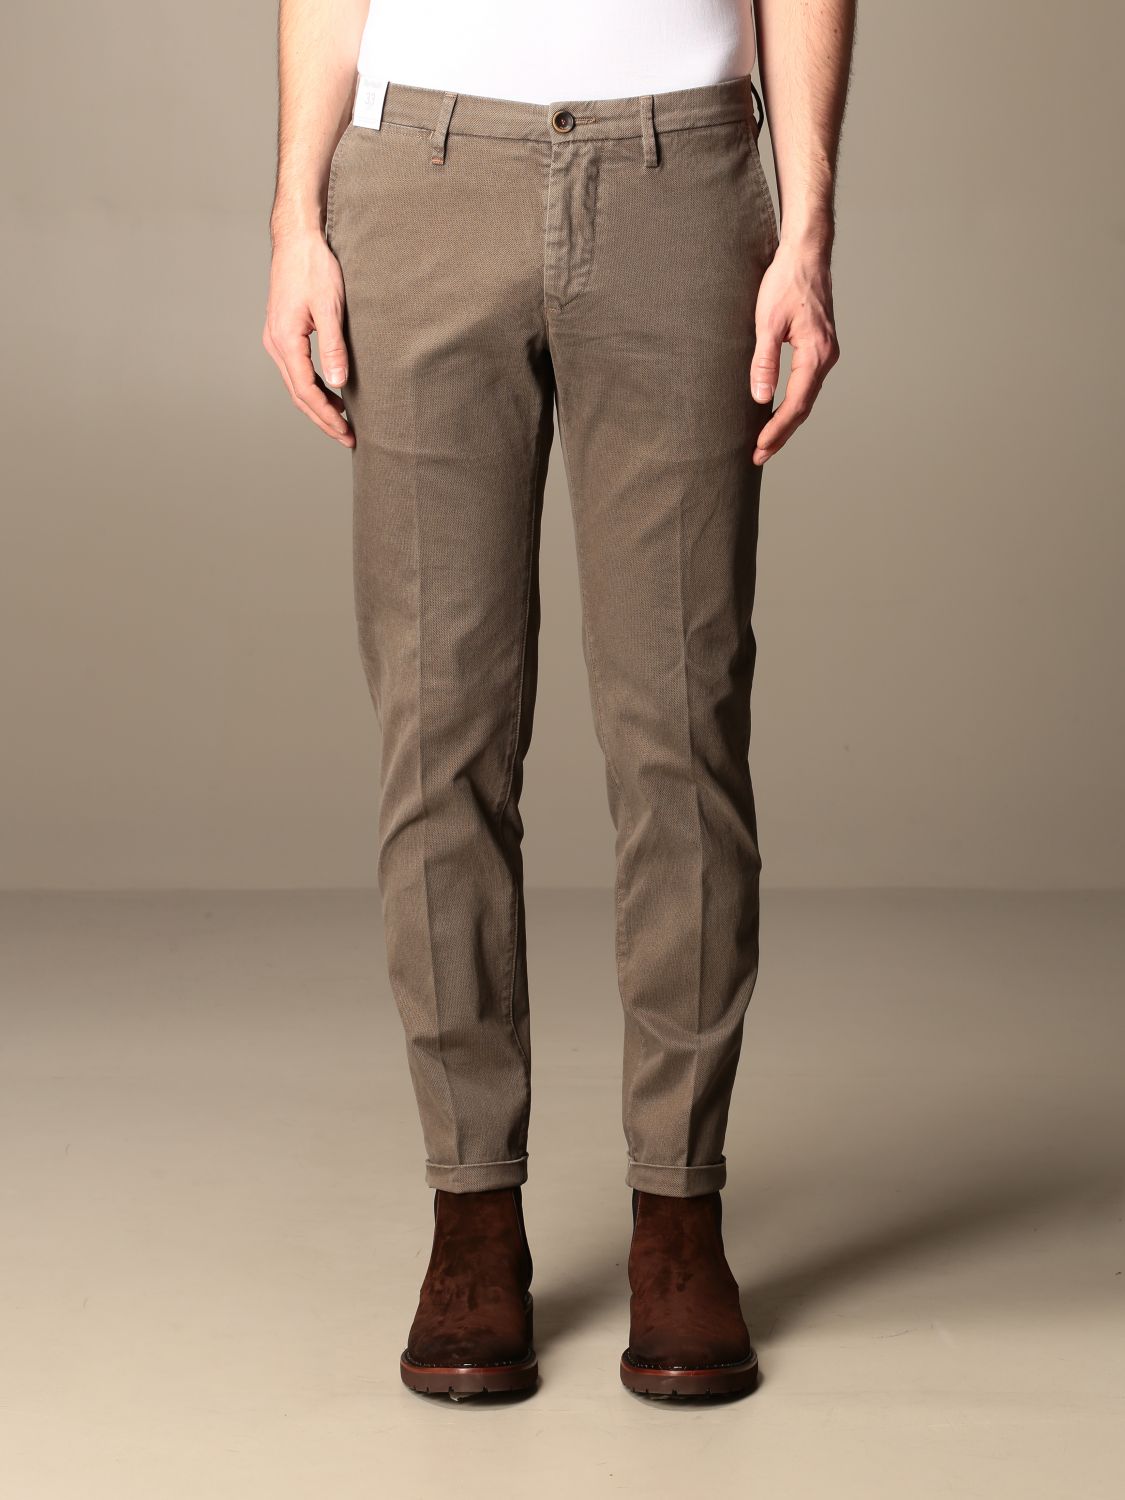 Pantalone in cotone stretch Giglio.com Uomo Abbigliamento Pantaloni e jeans Pantaloni Pantaloni stretch 